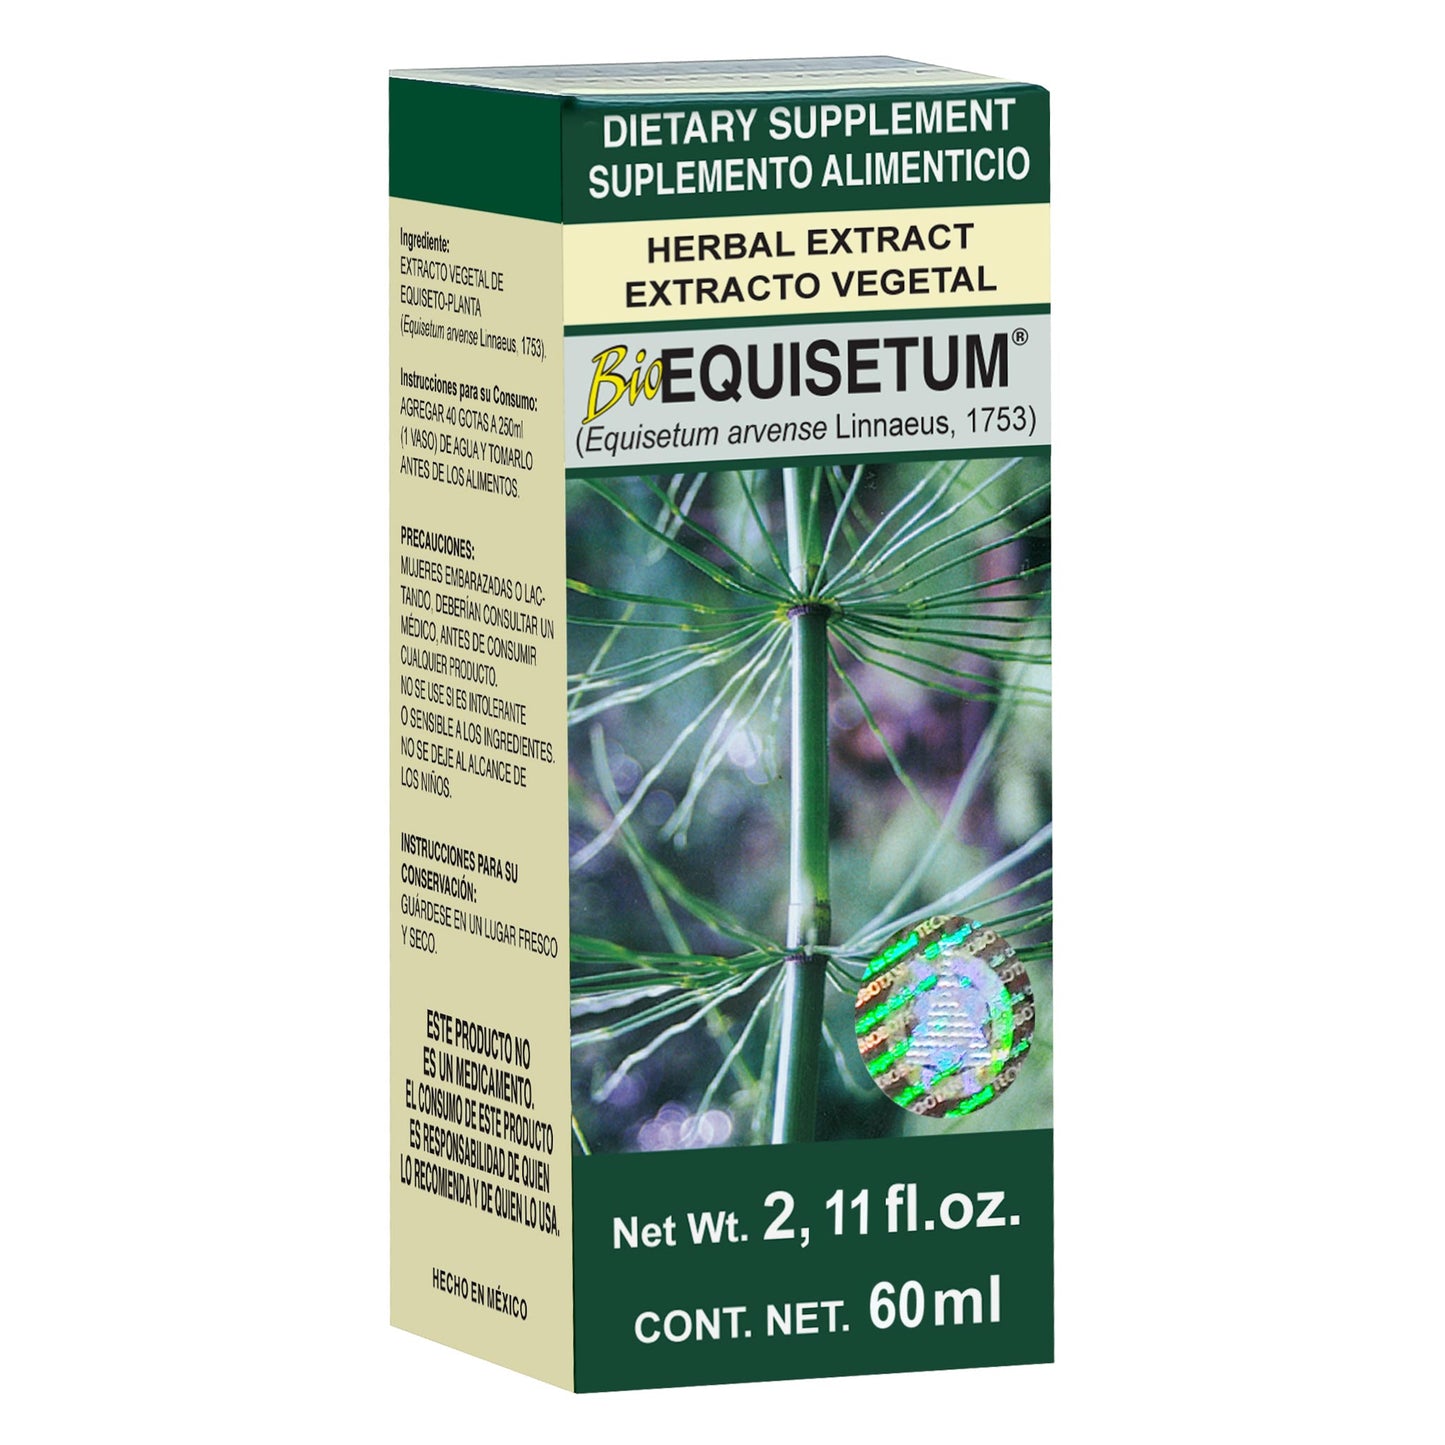 BIOEQUISETUM ® extracto vegetal 60ml